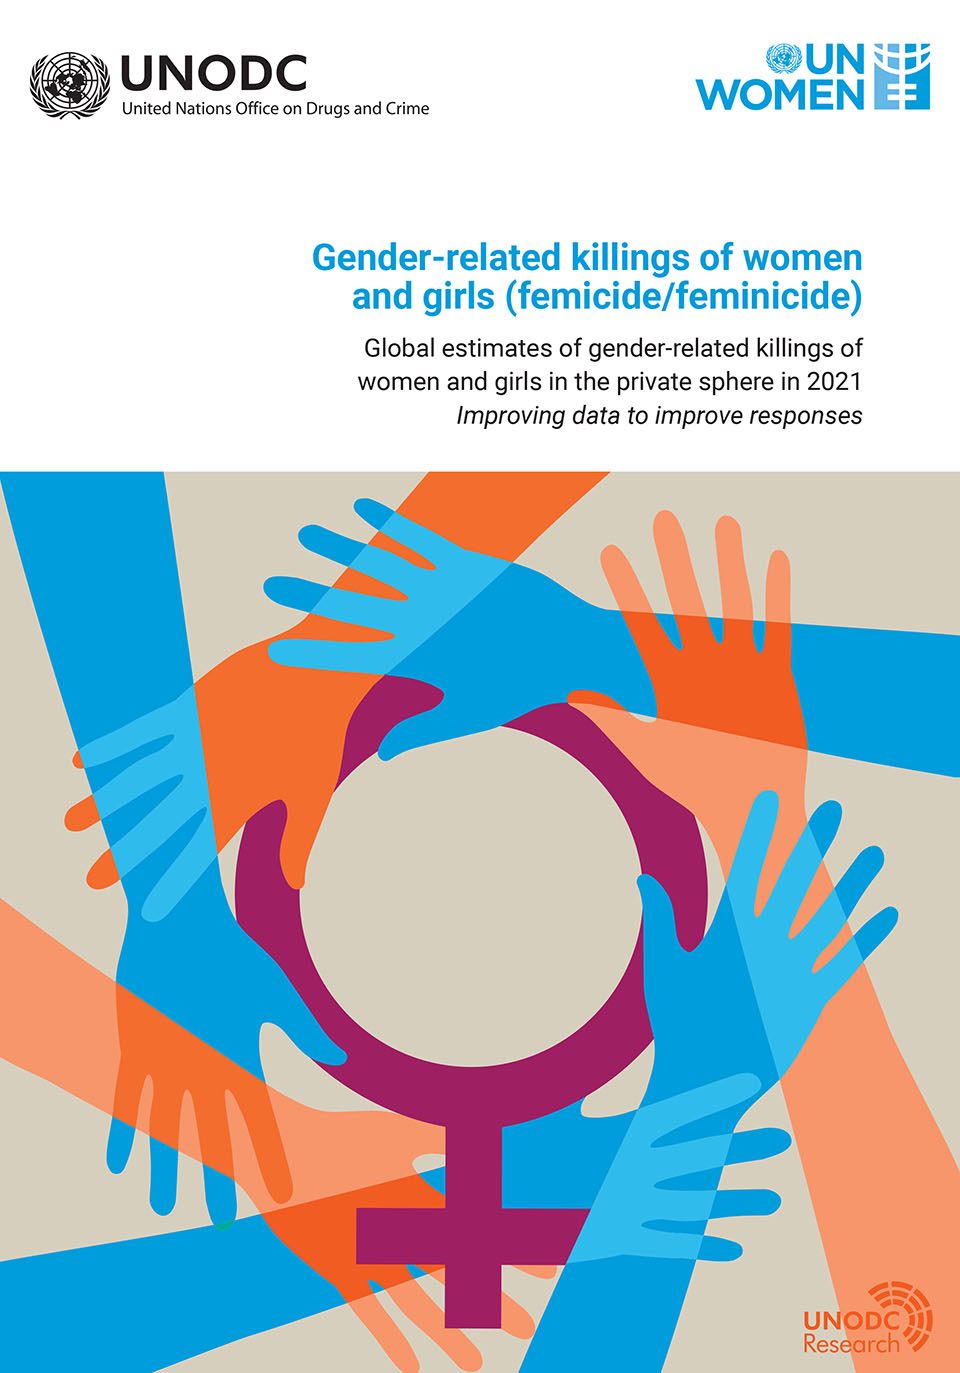 Gender-related killings of women and girls (femicide/feminicide)*